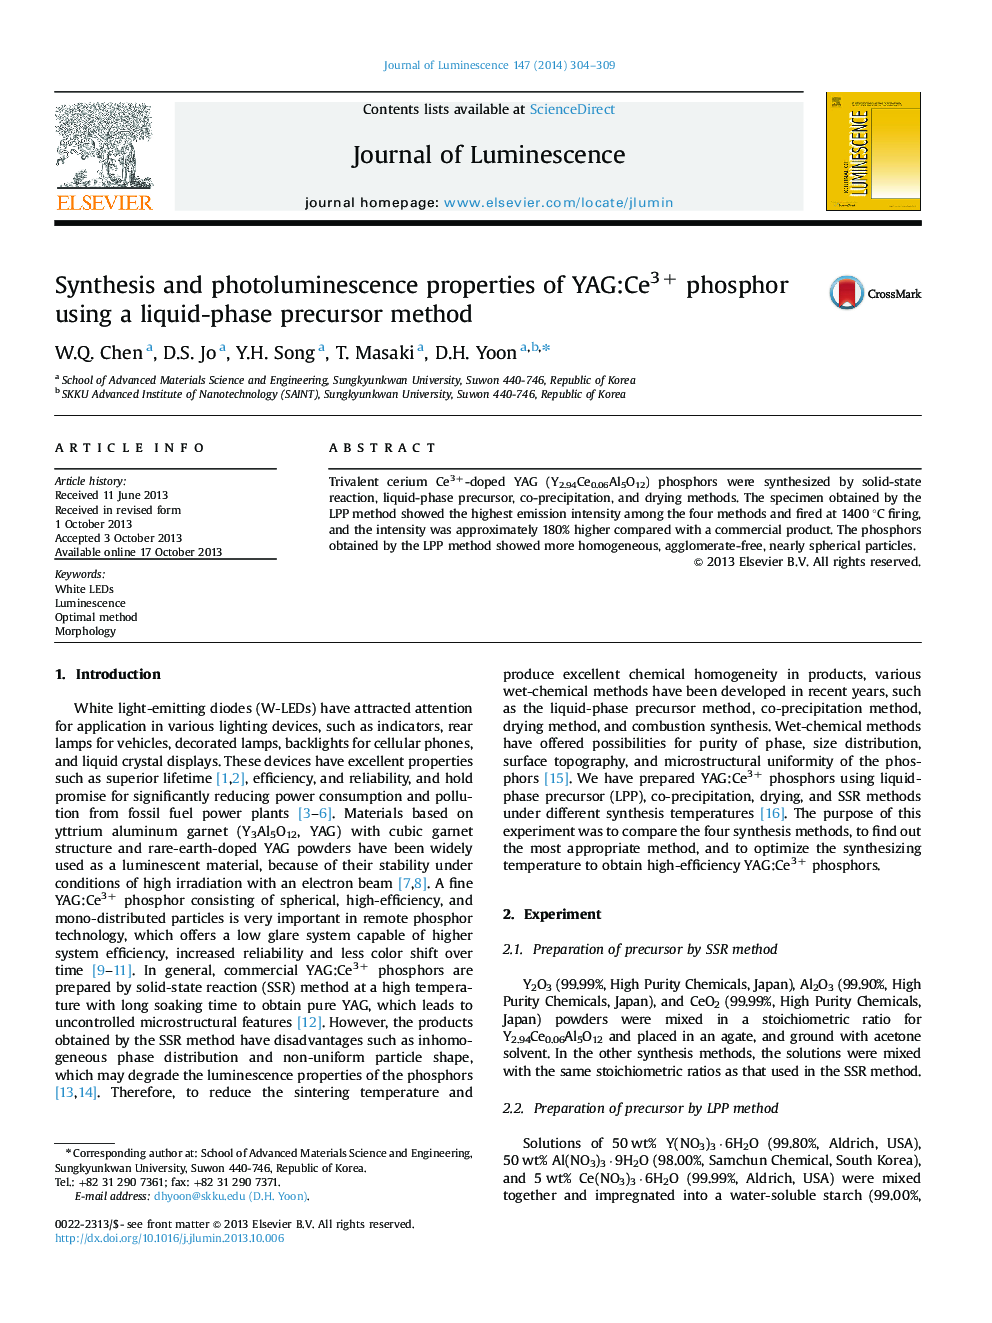 Synthesis and photoluminescence properties of YAG:Ce3+ phosphor using a liquid-phase precursor method